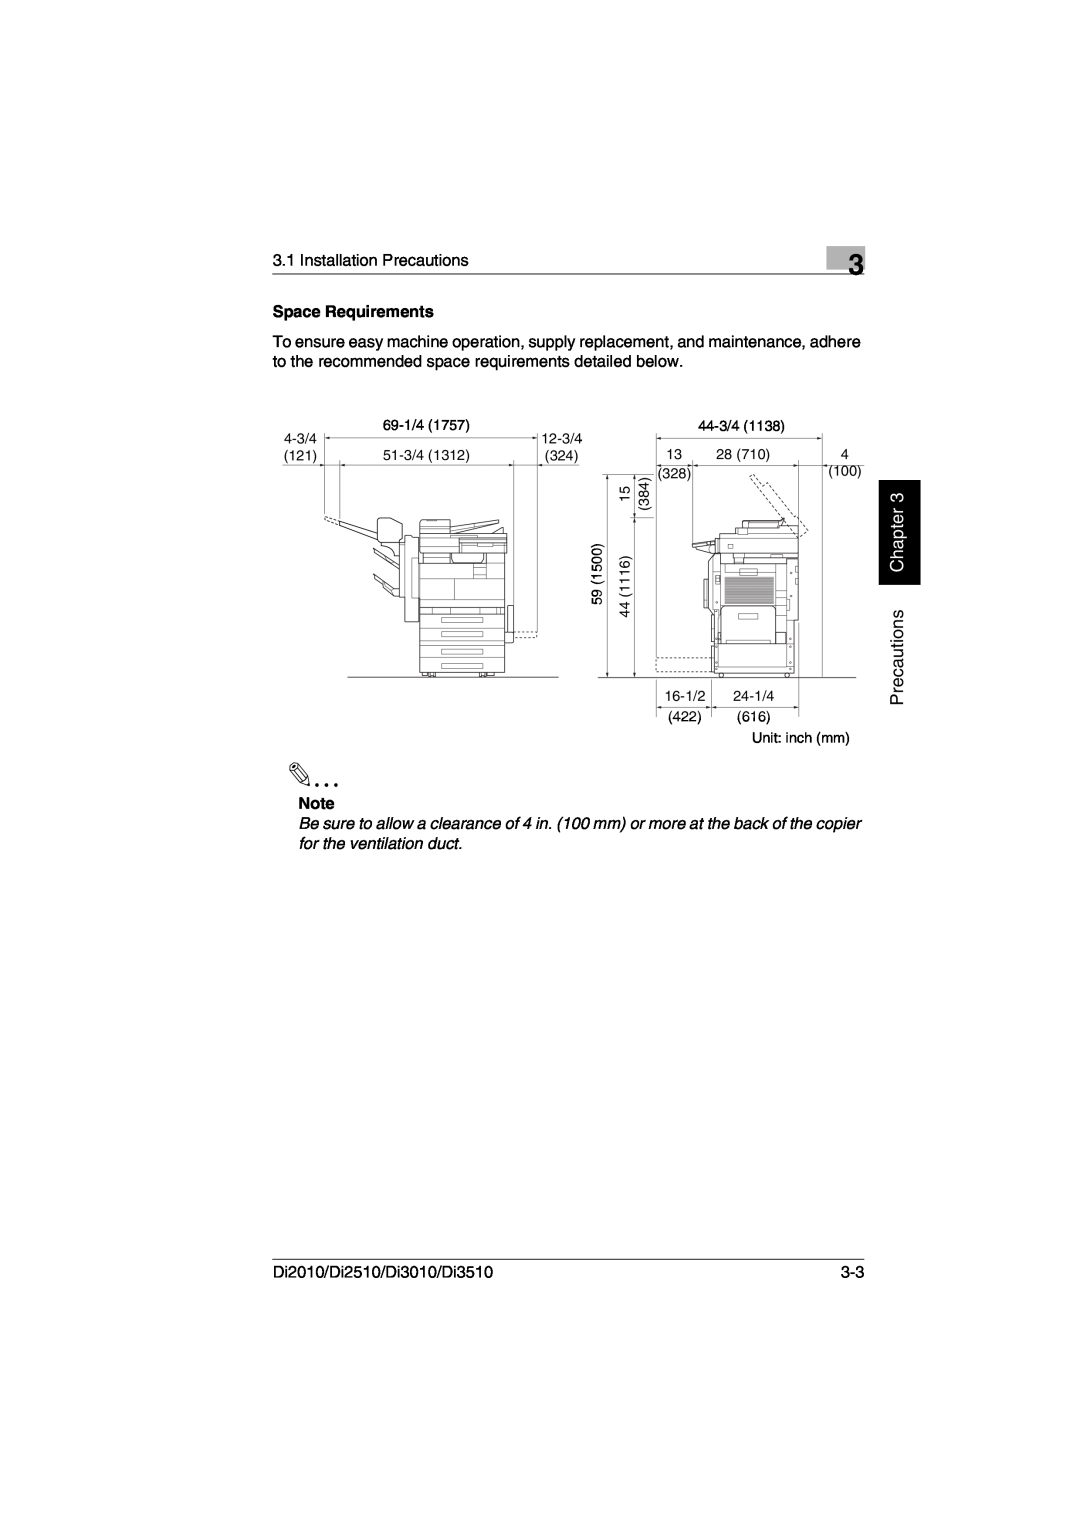 Minolta DI2510, DI2010, DI3010, Di3510 user manual Precautions Chapter, Space Requirements 